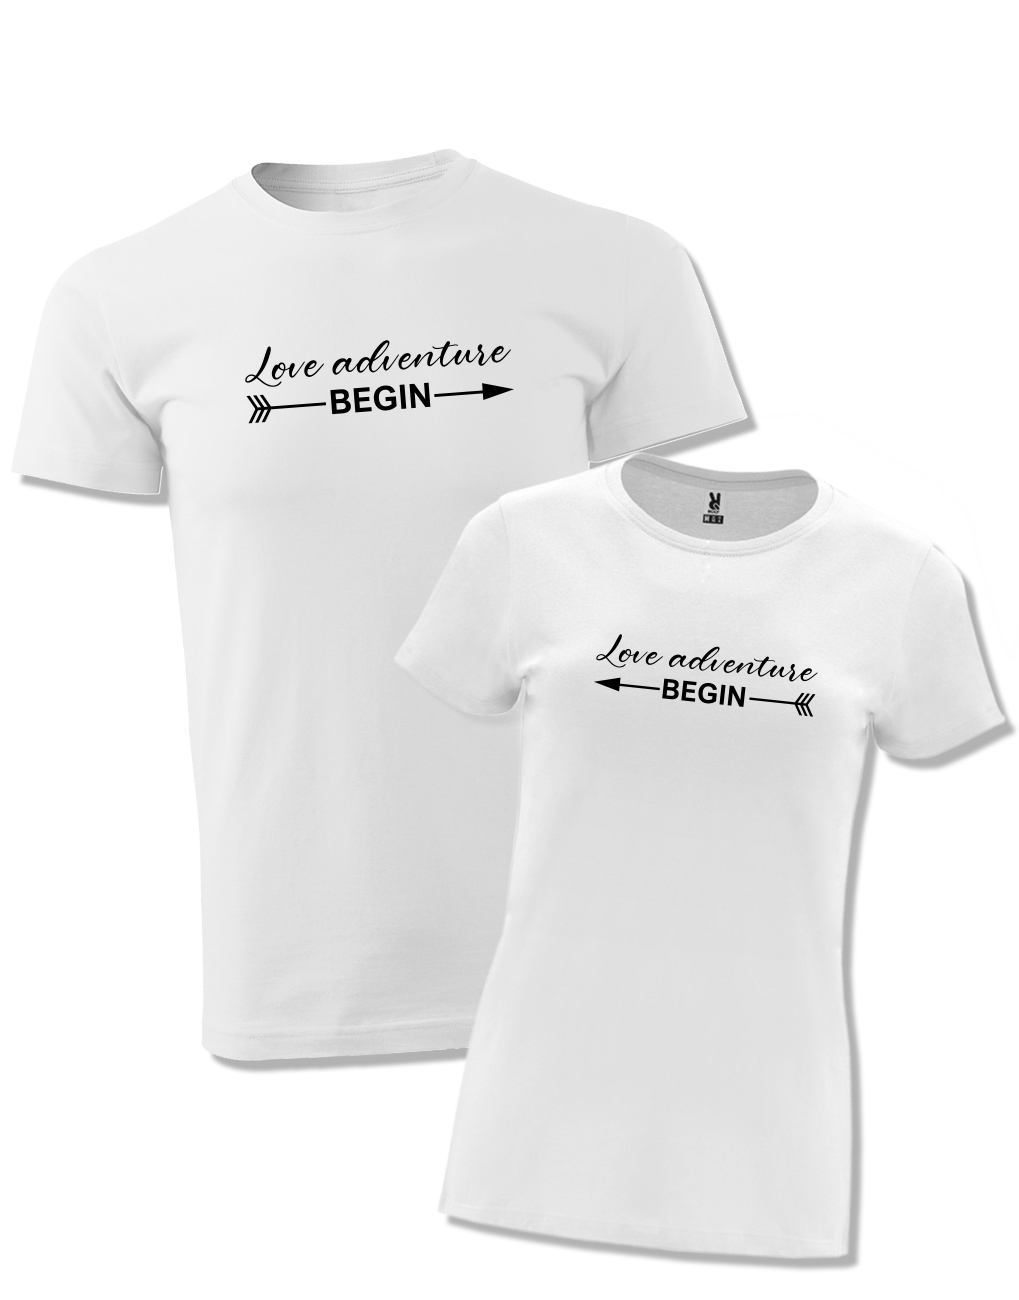 Párová trička s potiskem Love adventure